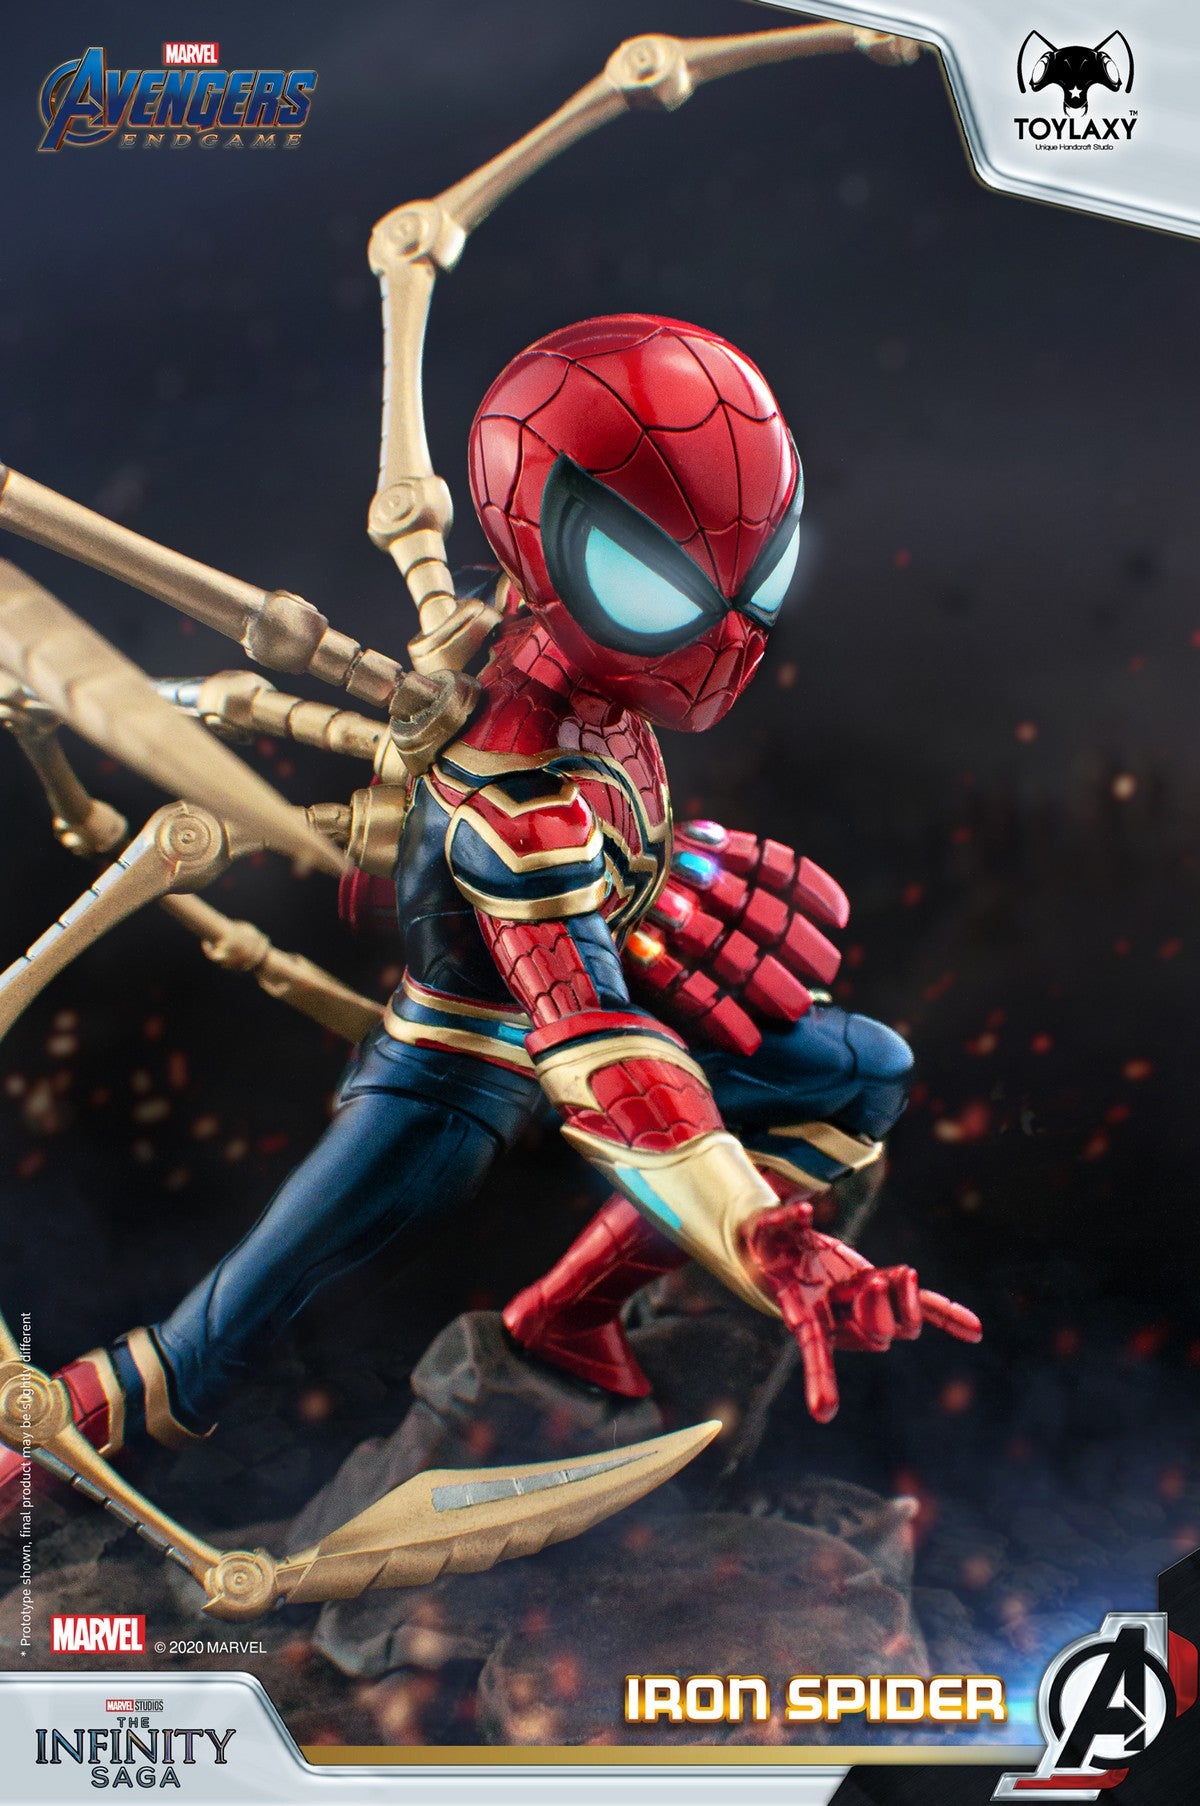 漫威復仇者聯盟：蜘蛛俠--鐵甲蜘蛛特別版正版模型手辦人偶玩具終局之戰版 Marvel's Avengers: Iron Spider Spider Man Official Figure Toy power in endgame mini